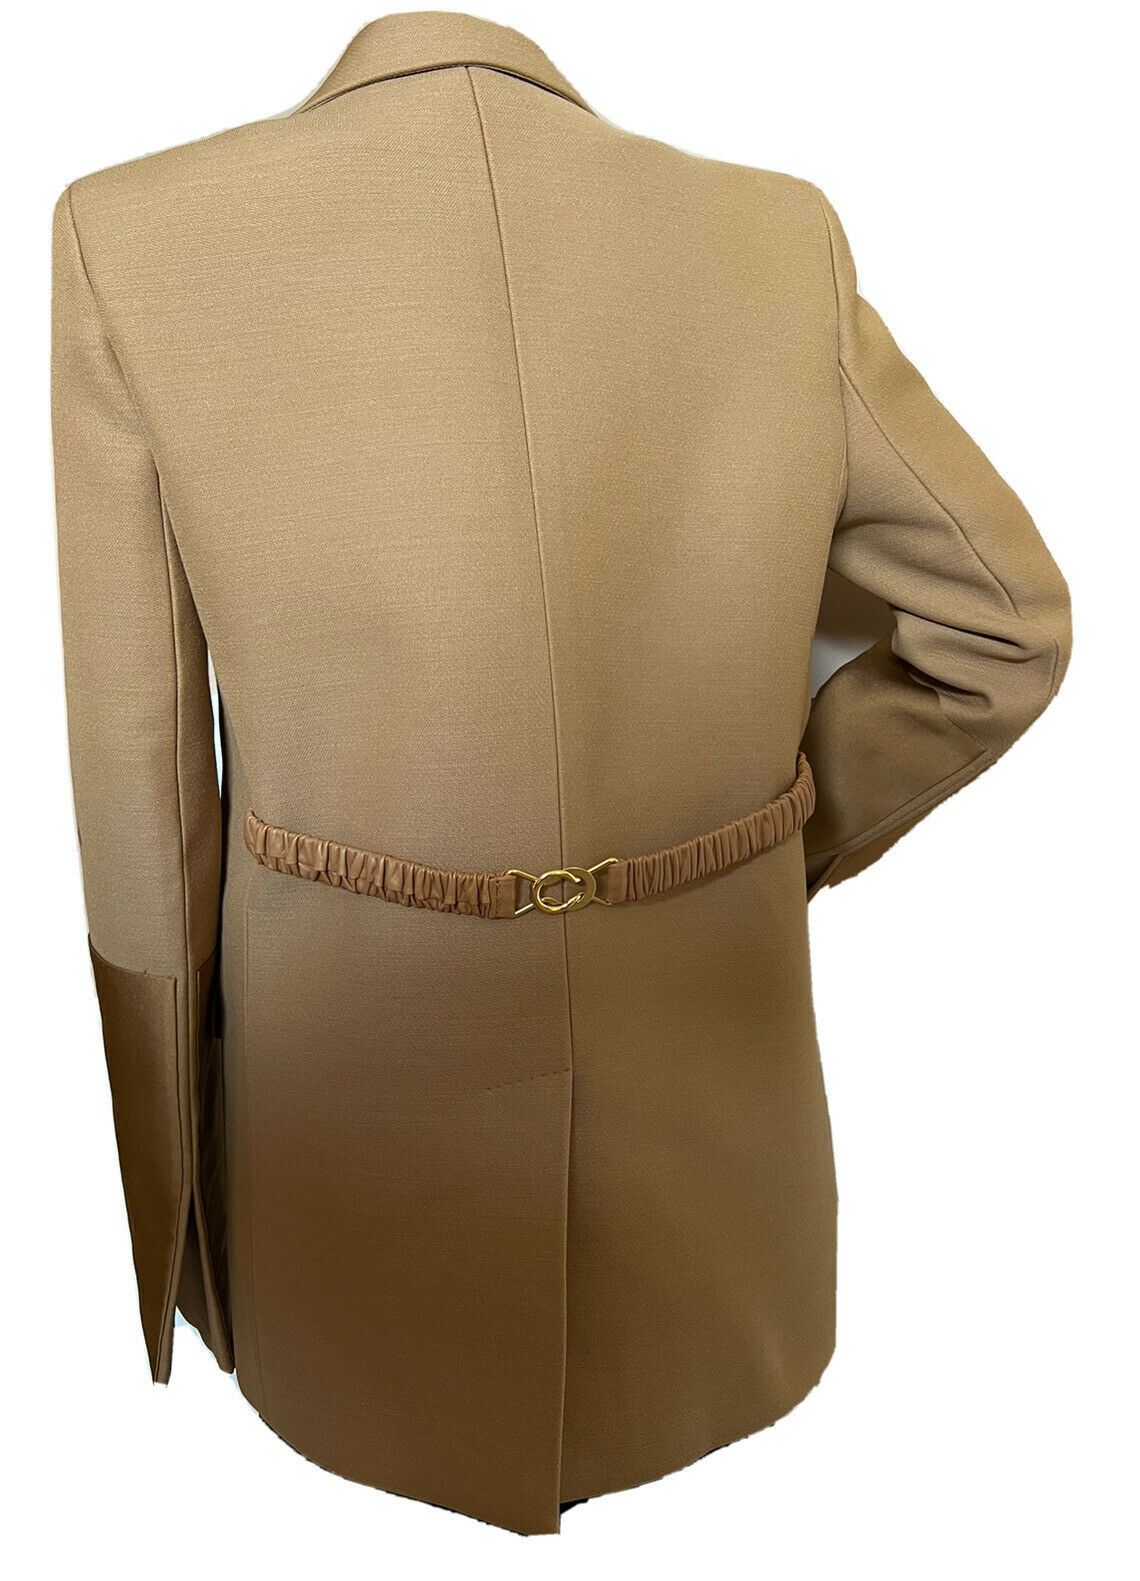 NWT $2880 Bottega Veneta Women's Camel/Caramel Single-breasted Jacket 42 US